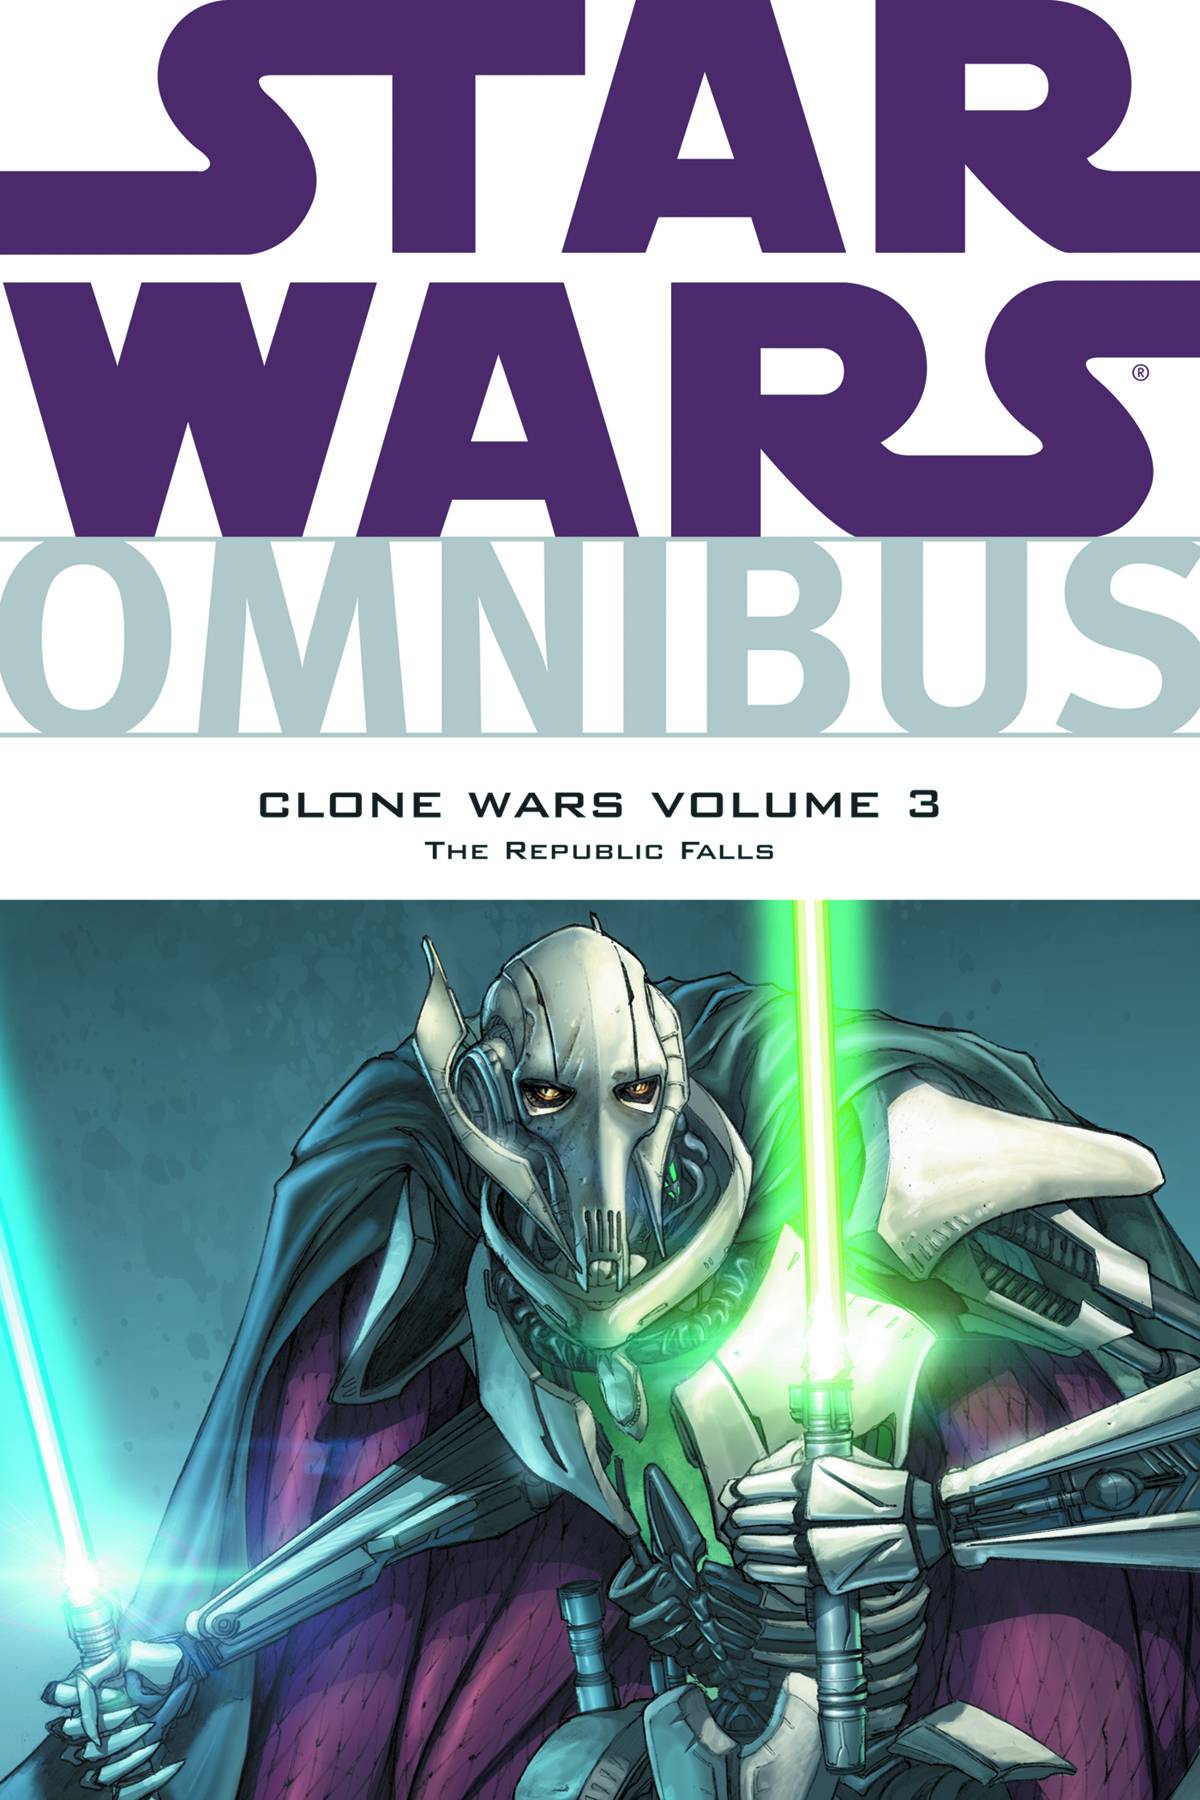 Star Wars Omnibus Clone Wars Volume 3 Republic Falls Graphic Novel